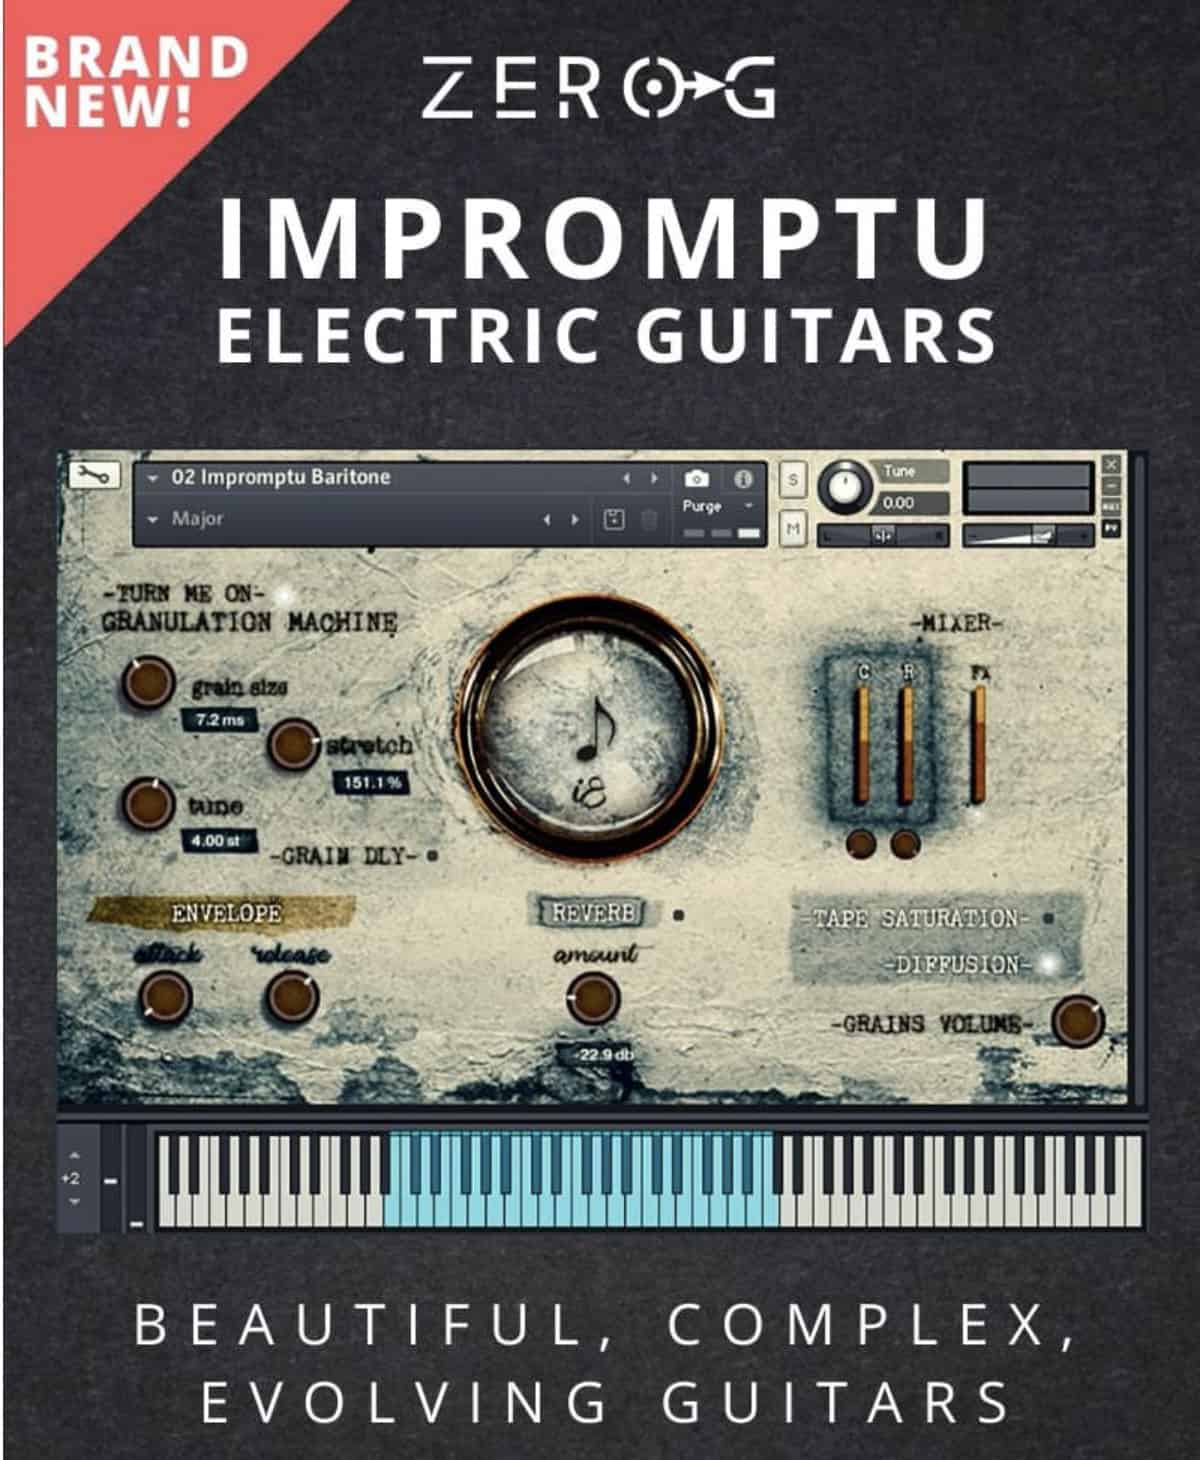 Impromptu Electric Guitars by Zero-G